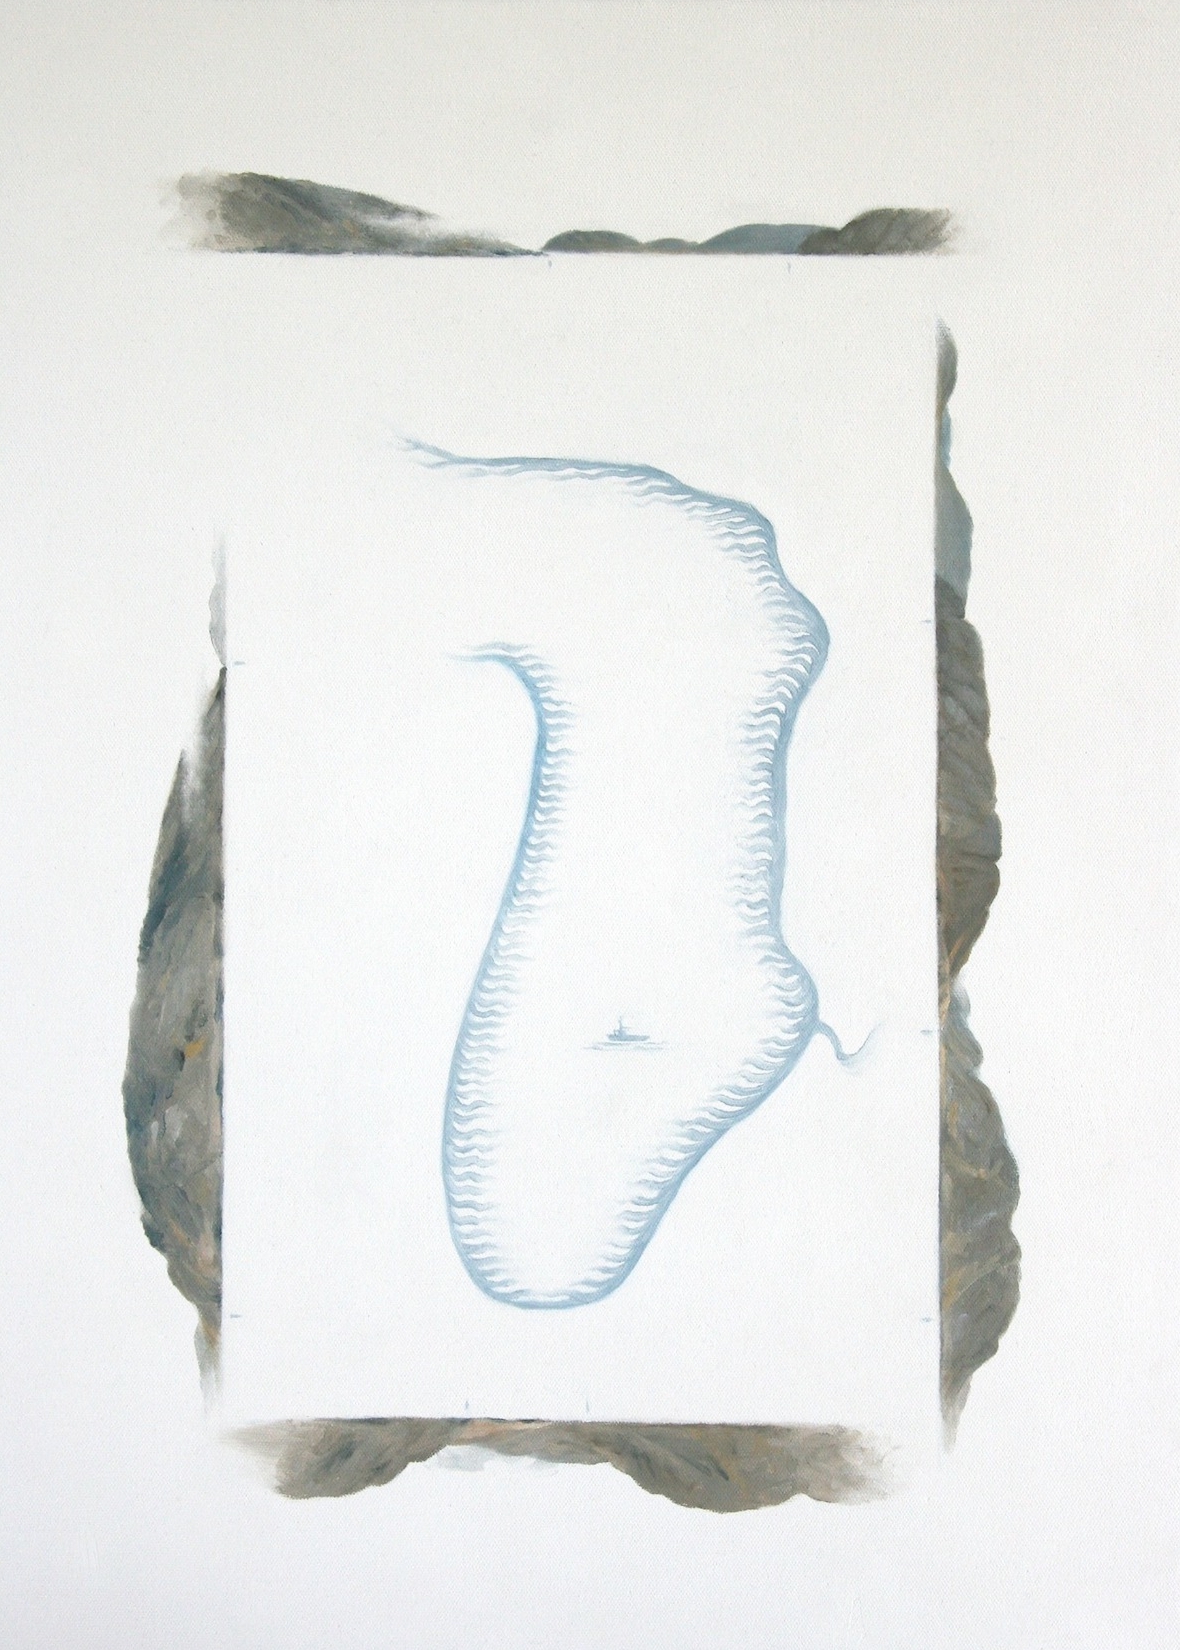    Kanaqukjuaq , 61cm x 46cm, oil on canvas, 2007.  